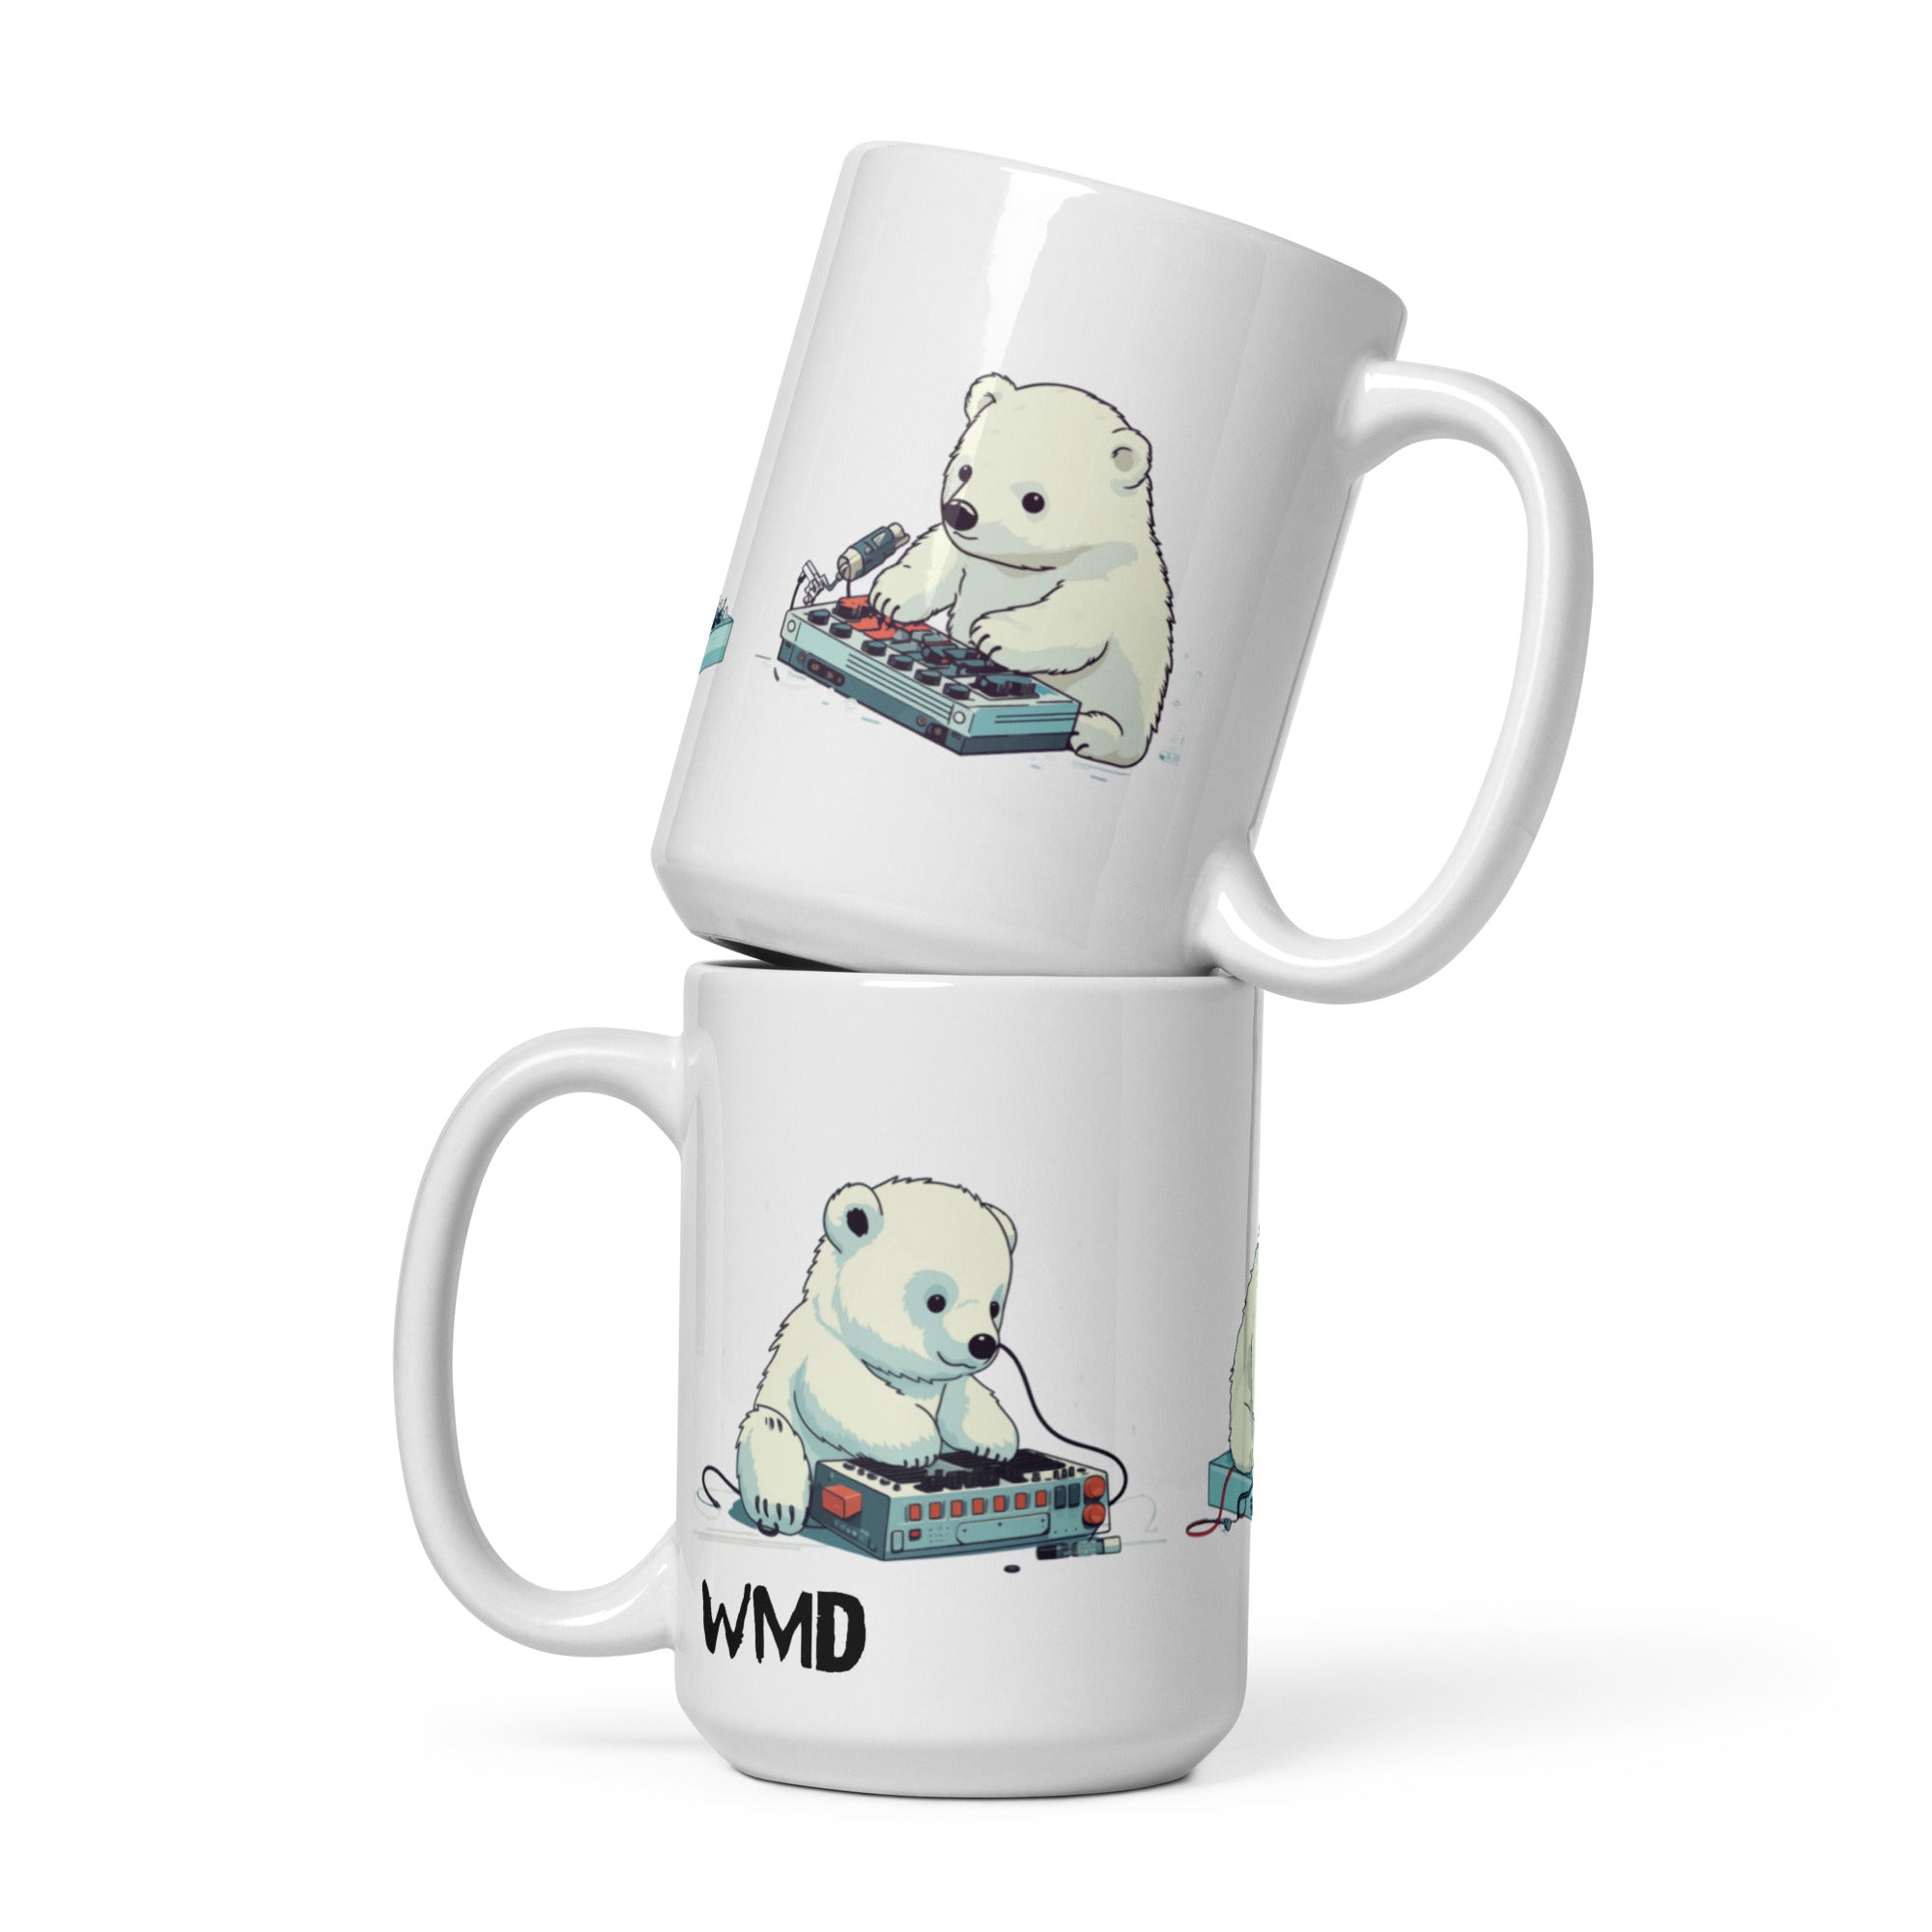 WMD - Mug - Learning to Patch Polarbears Mug - WMD - 15 oz - -